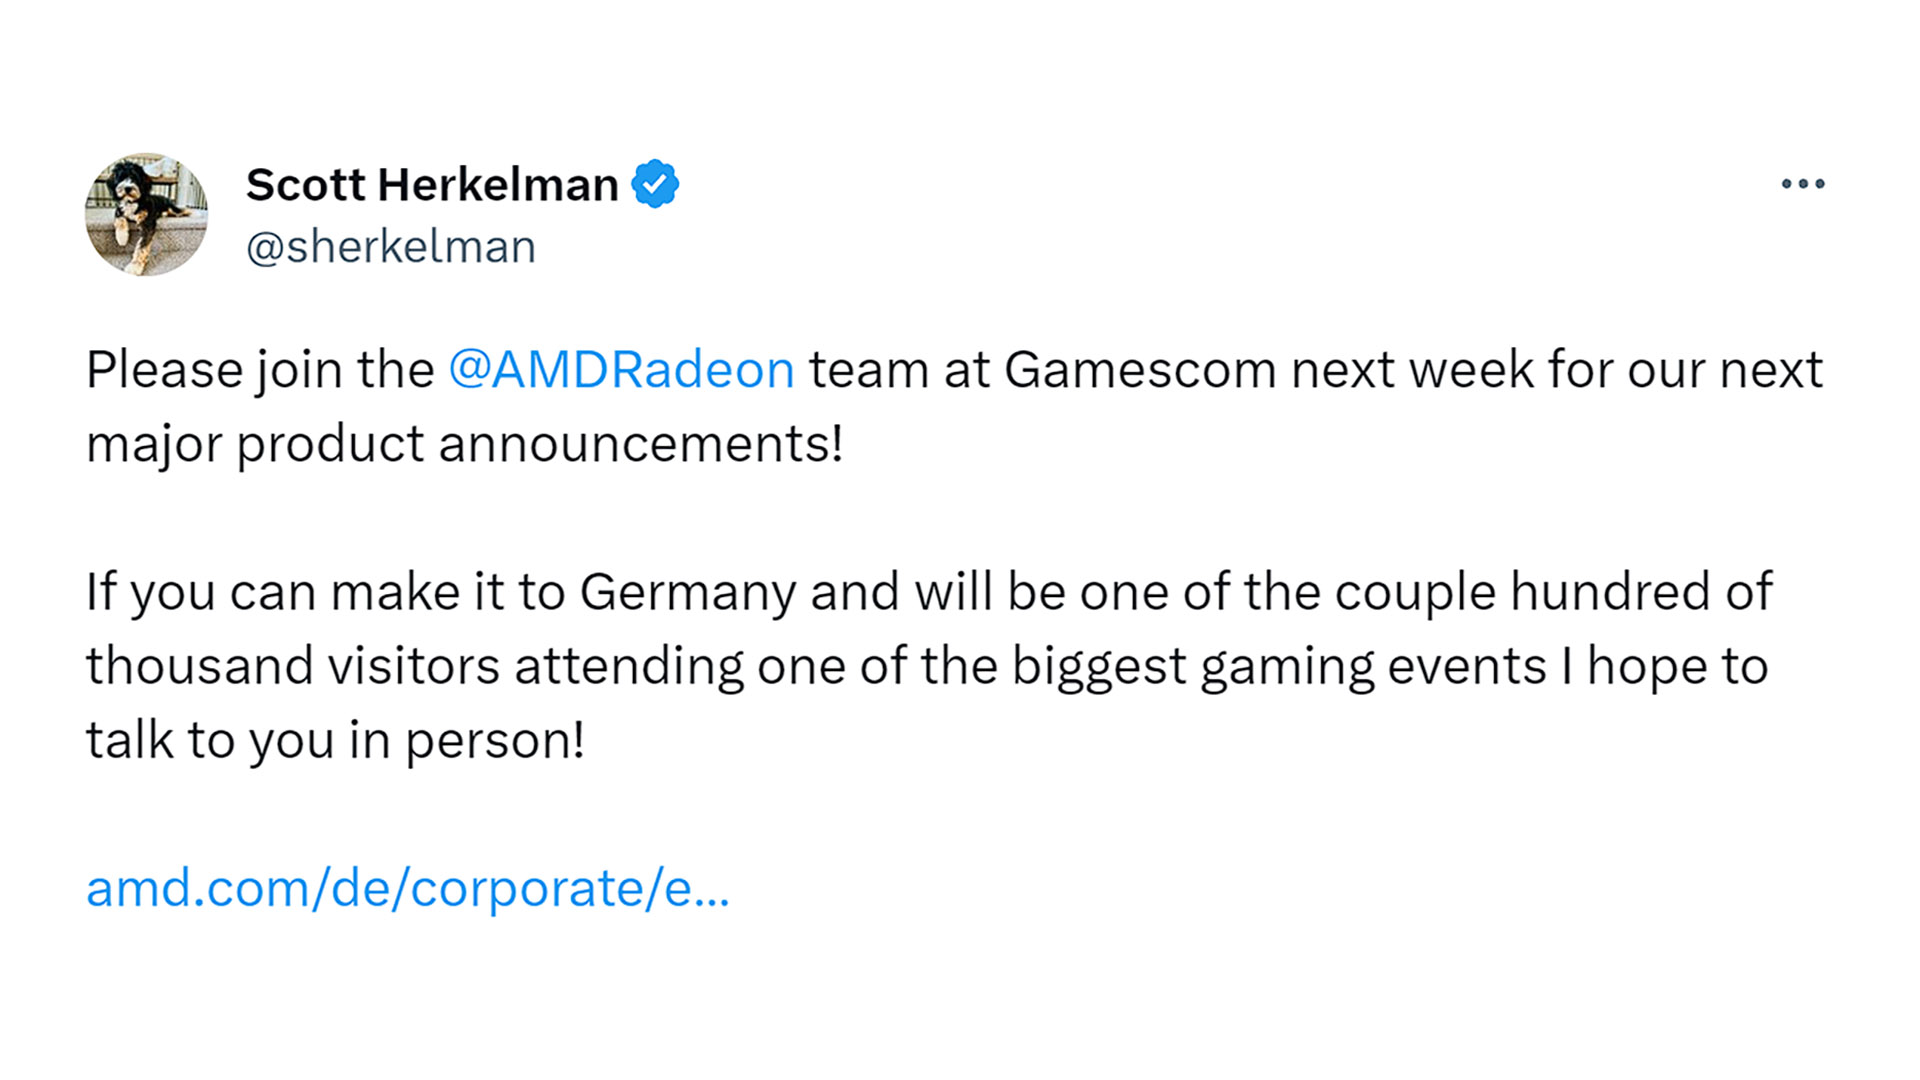 New AMD Radeon products confirmed for Gamescom: Tweet from Scott Herkelman confirming new Radeon products